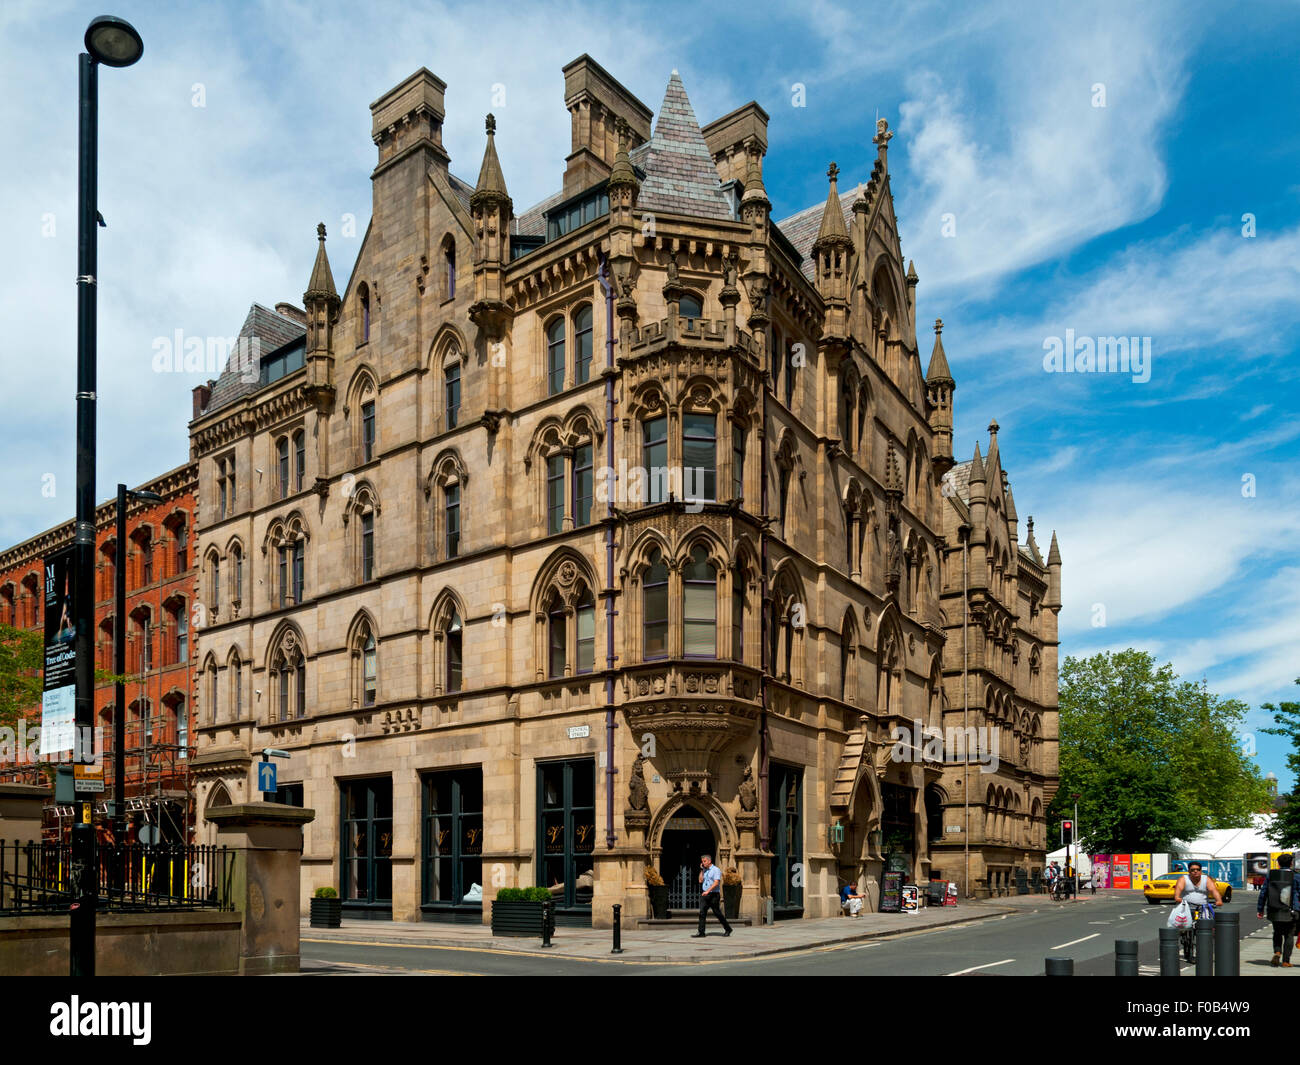 Lawrence Bâtiments, Mount Street, Manchester, Angleterre, Royaume-Uni. Pennington et Brigden, 1874 Banque D'Images